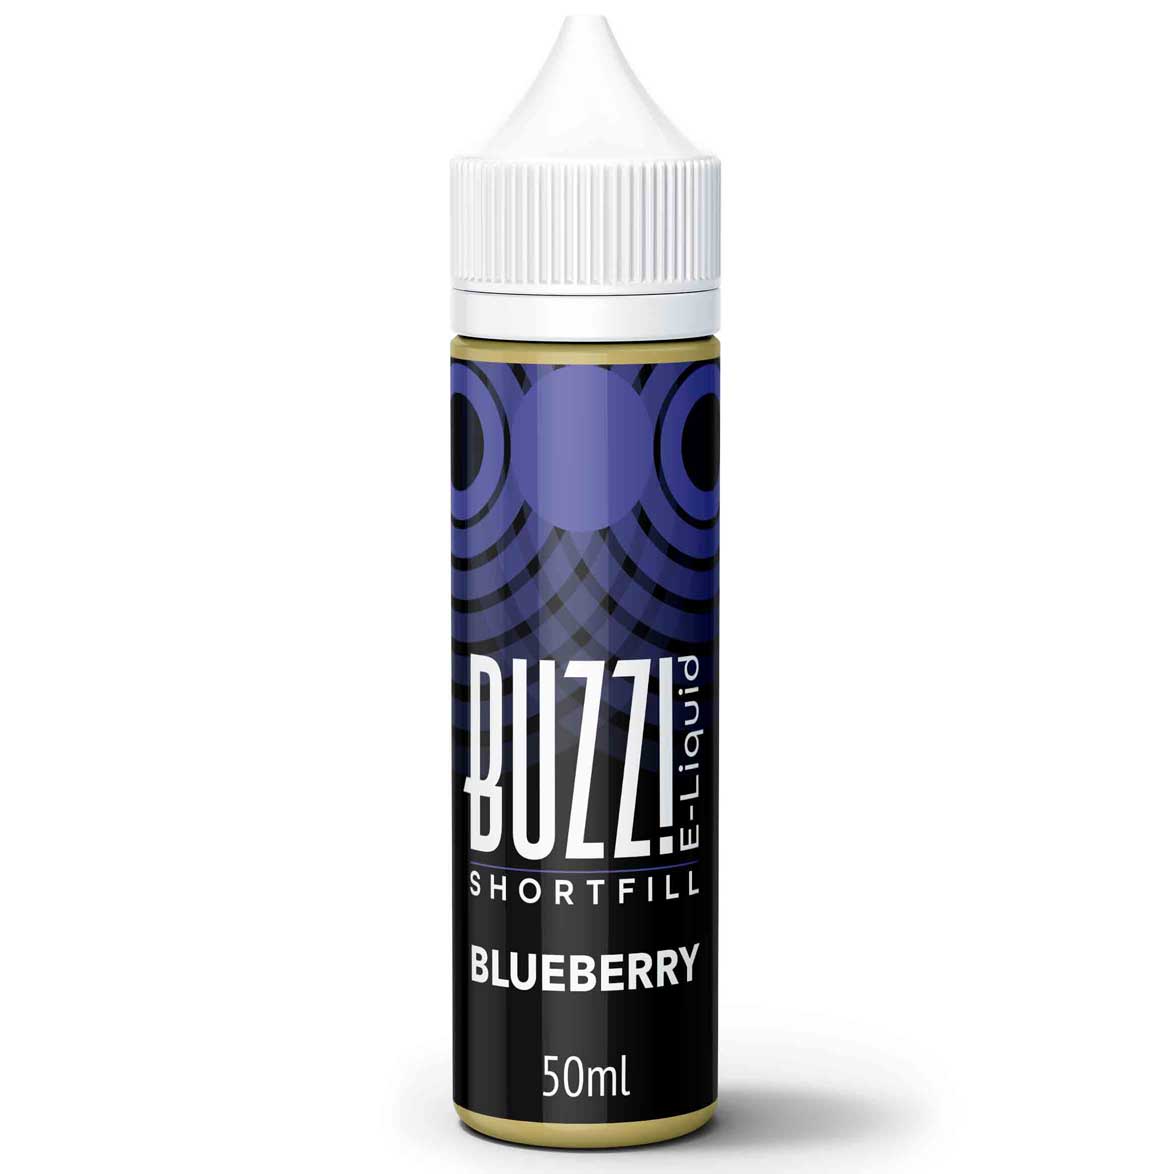 BUZZ BLUEBERRY SHORTFILL 50ml